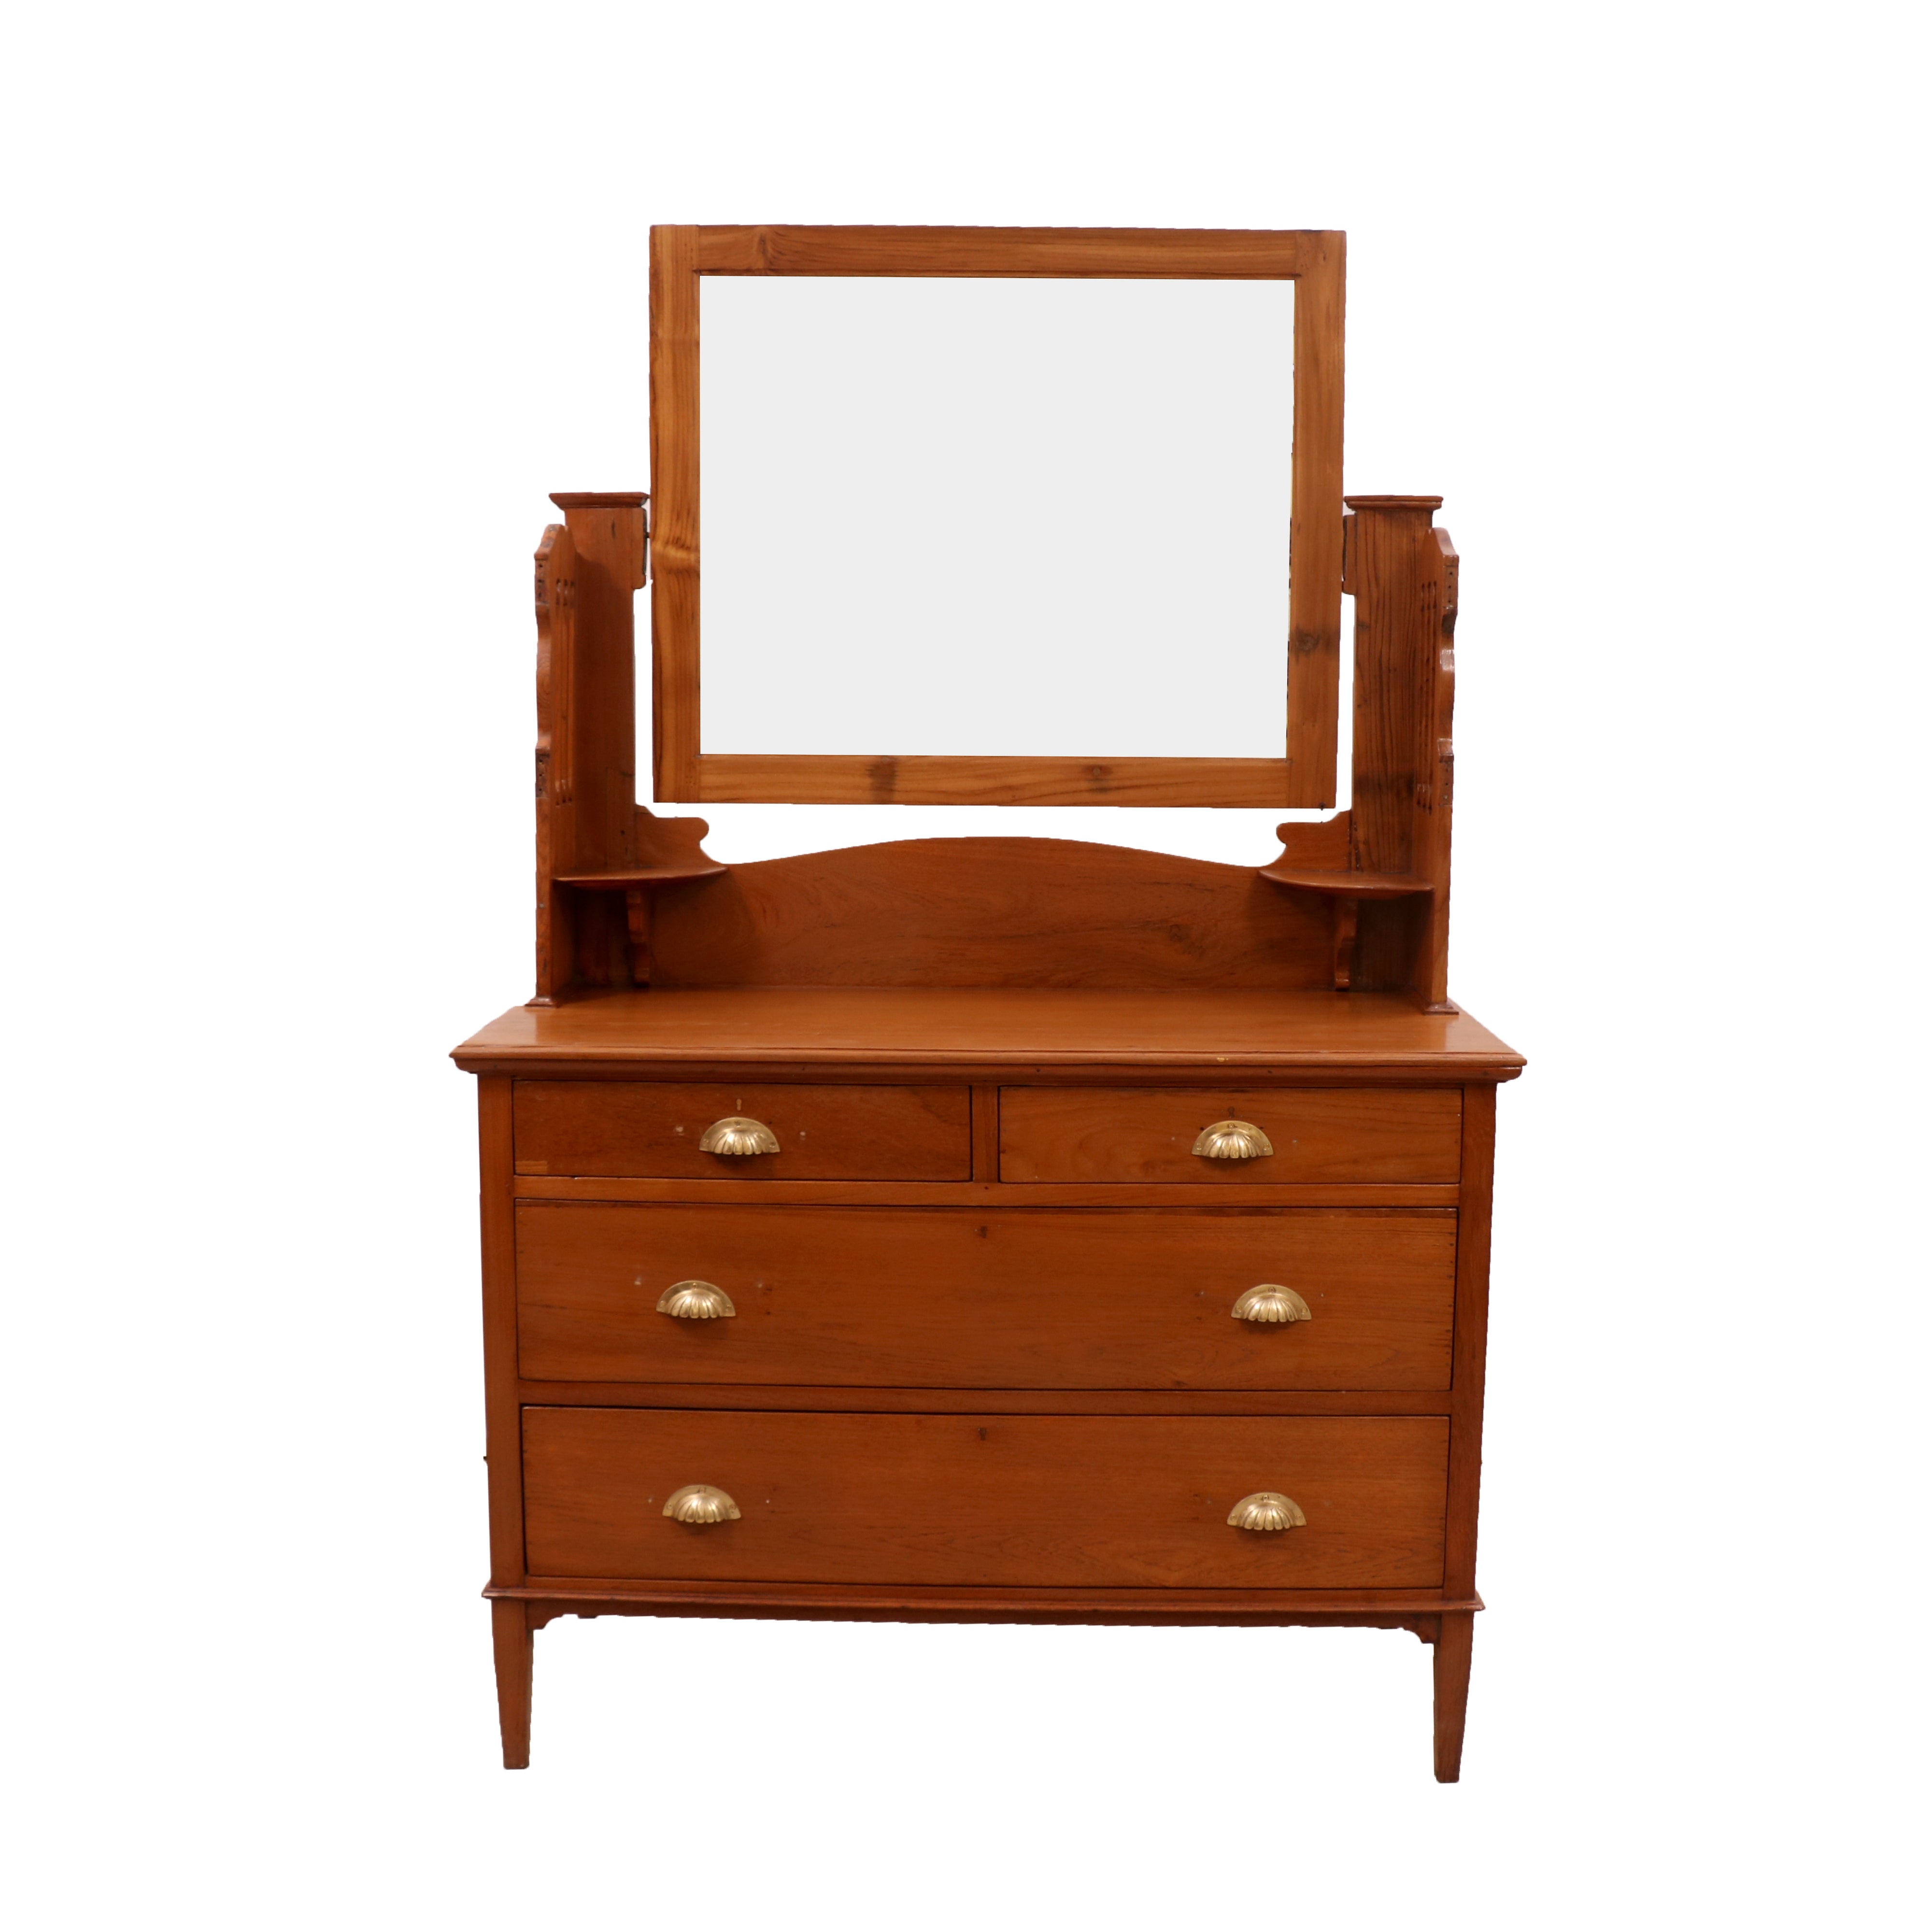 Solid Wood mirror Dresser Dressing Table